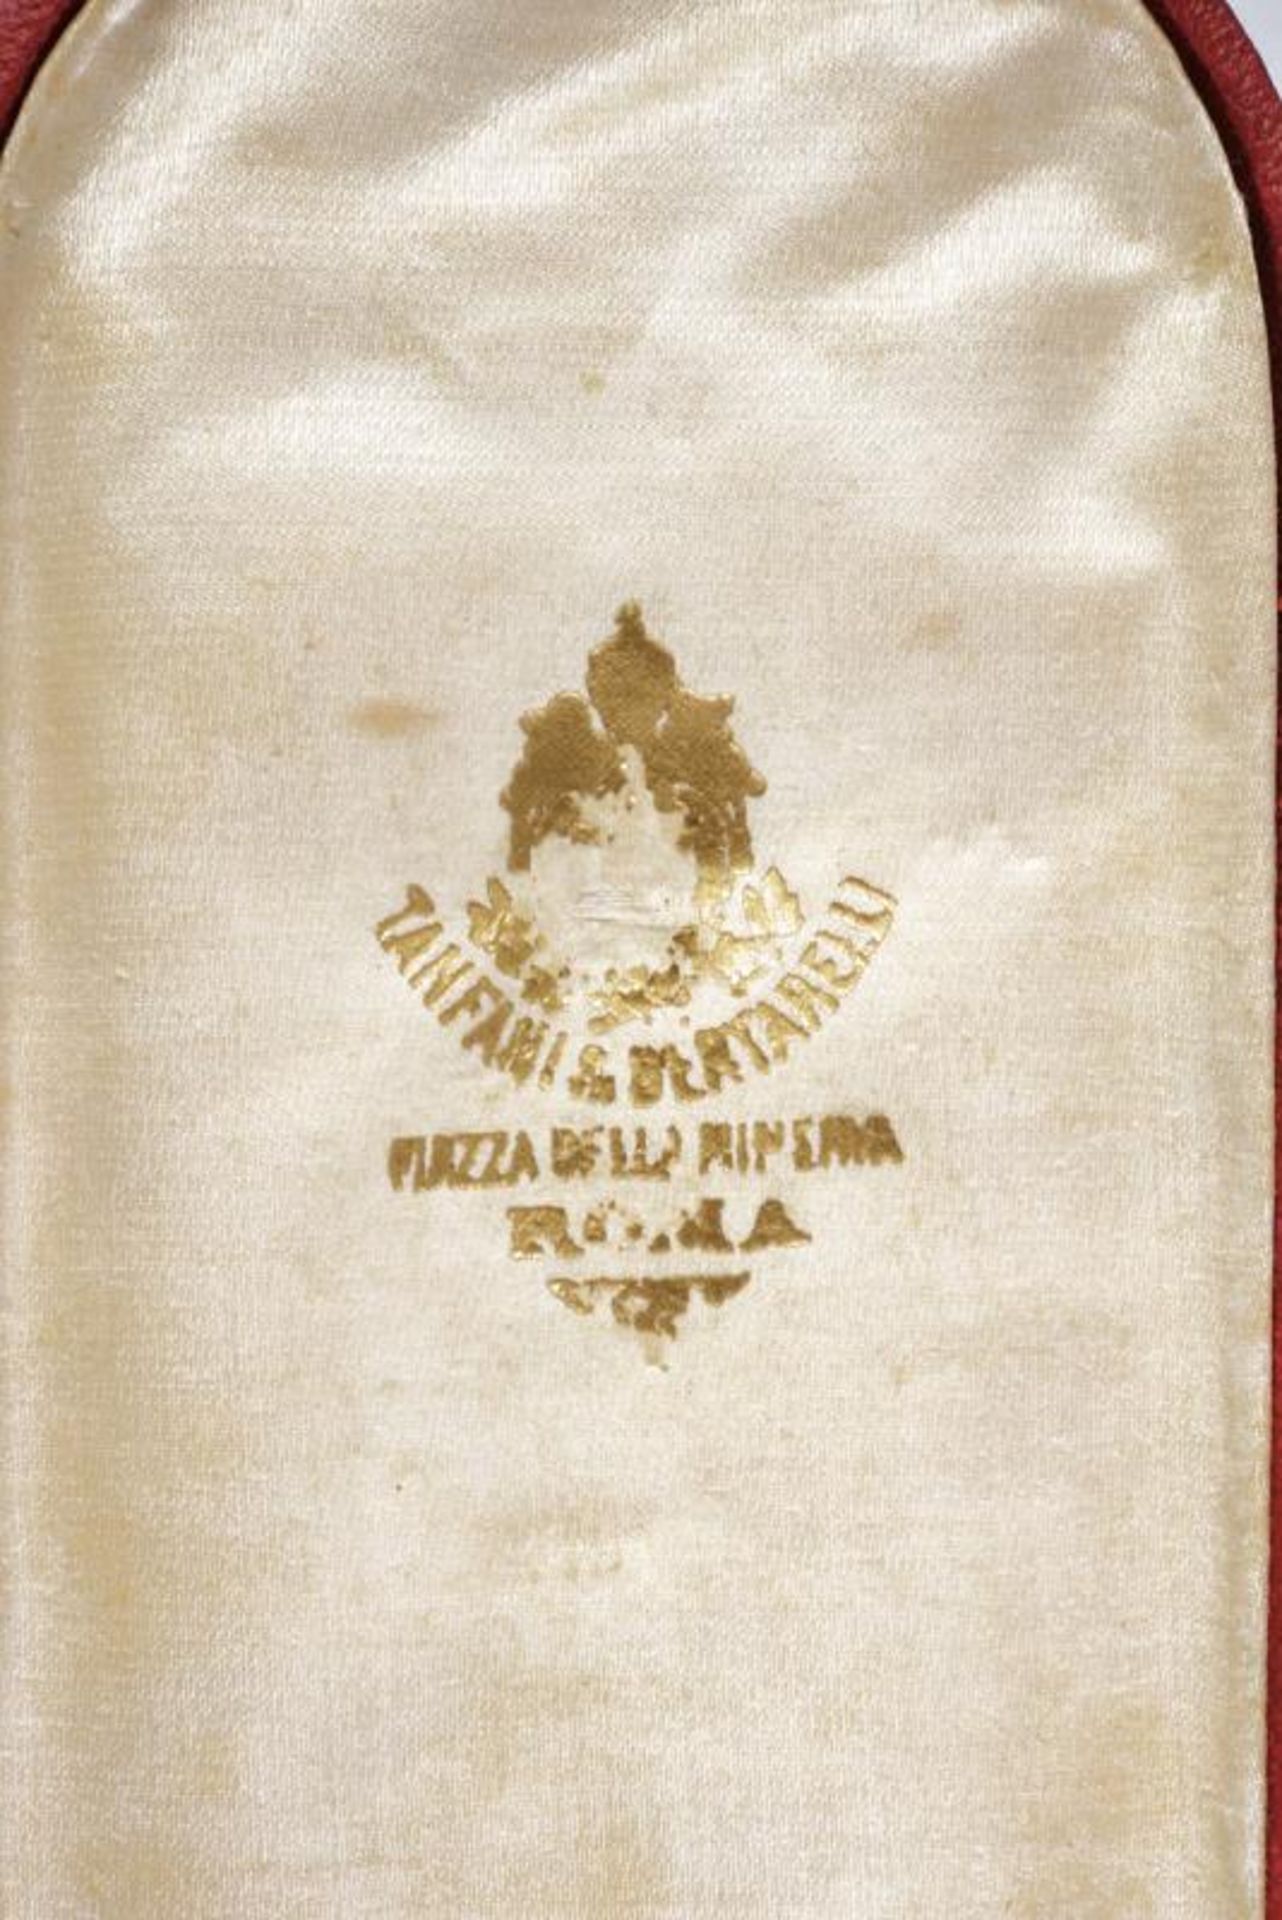 Sovereign Militar Order of Malta - Image 3 of 5